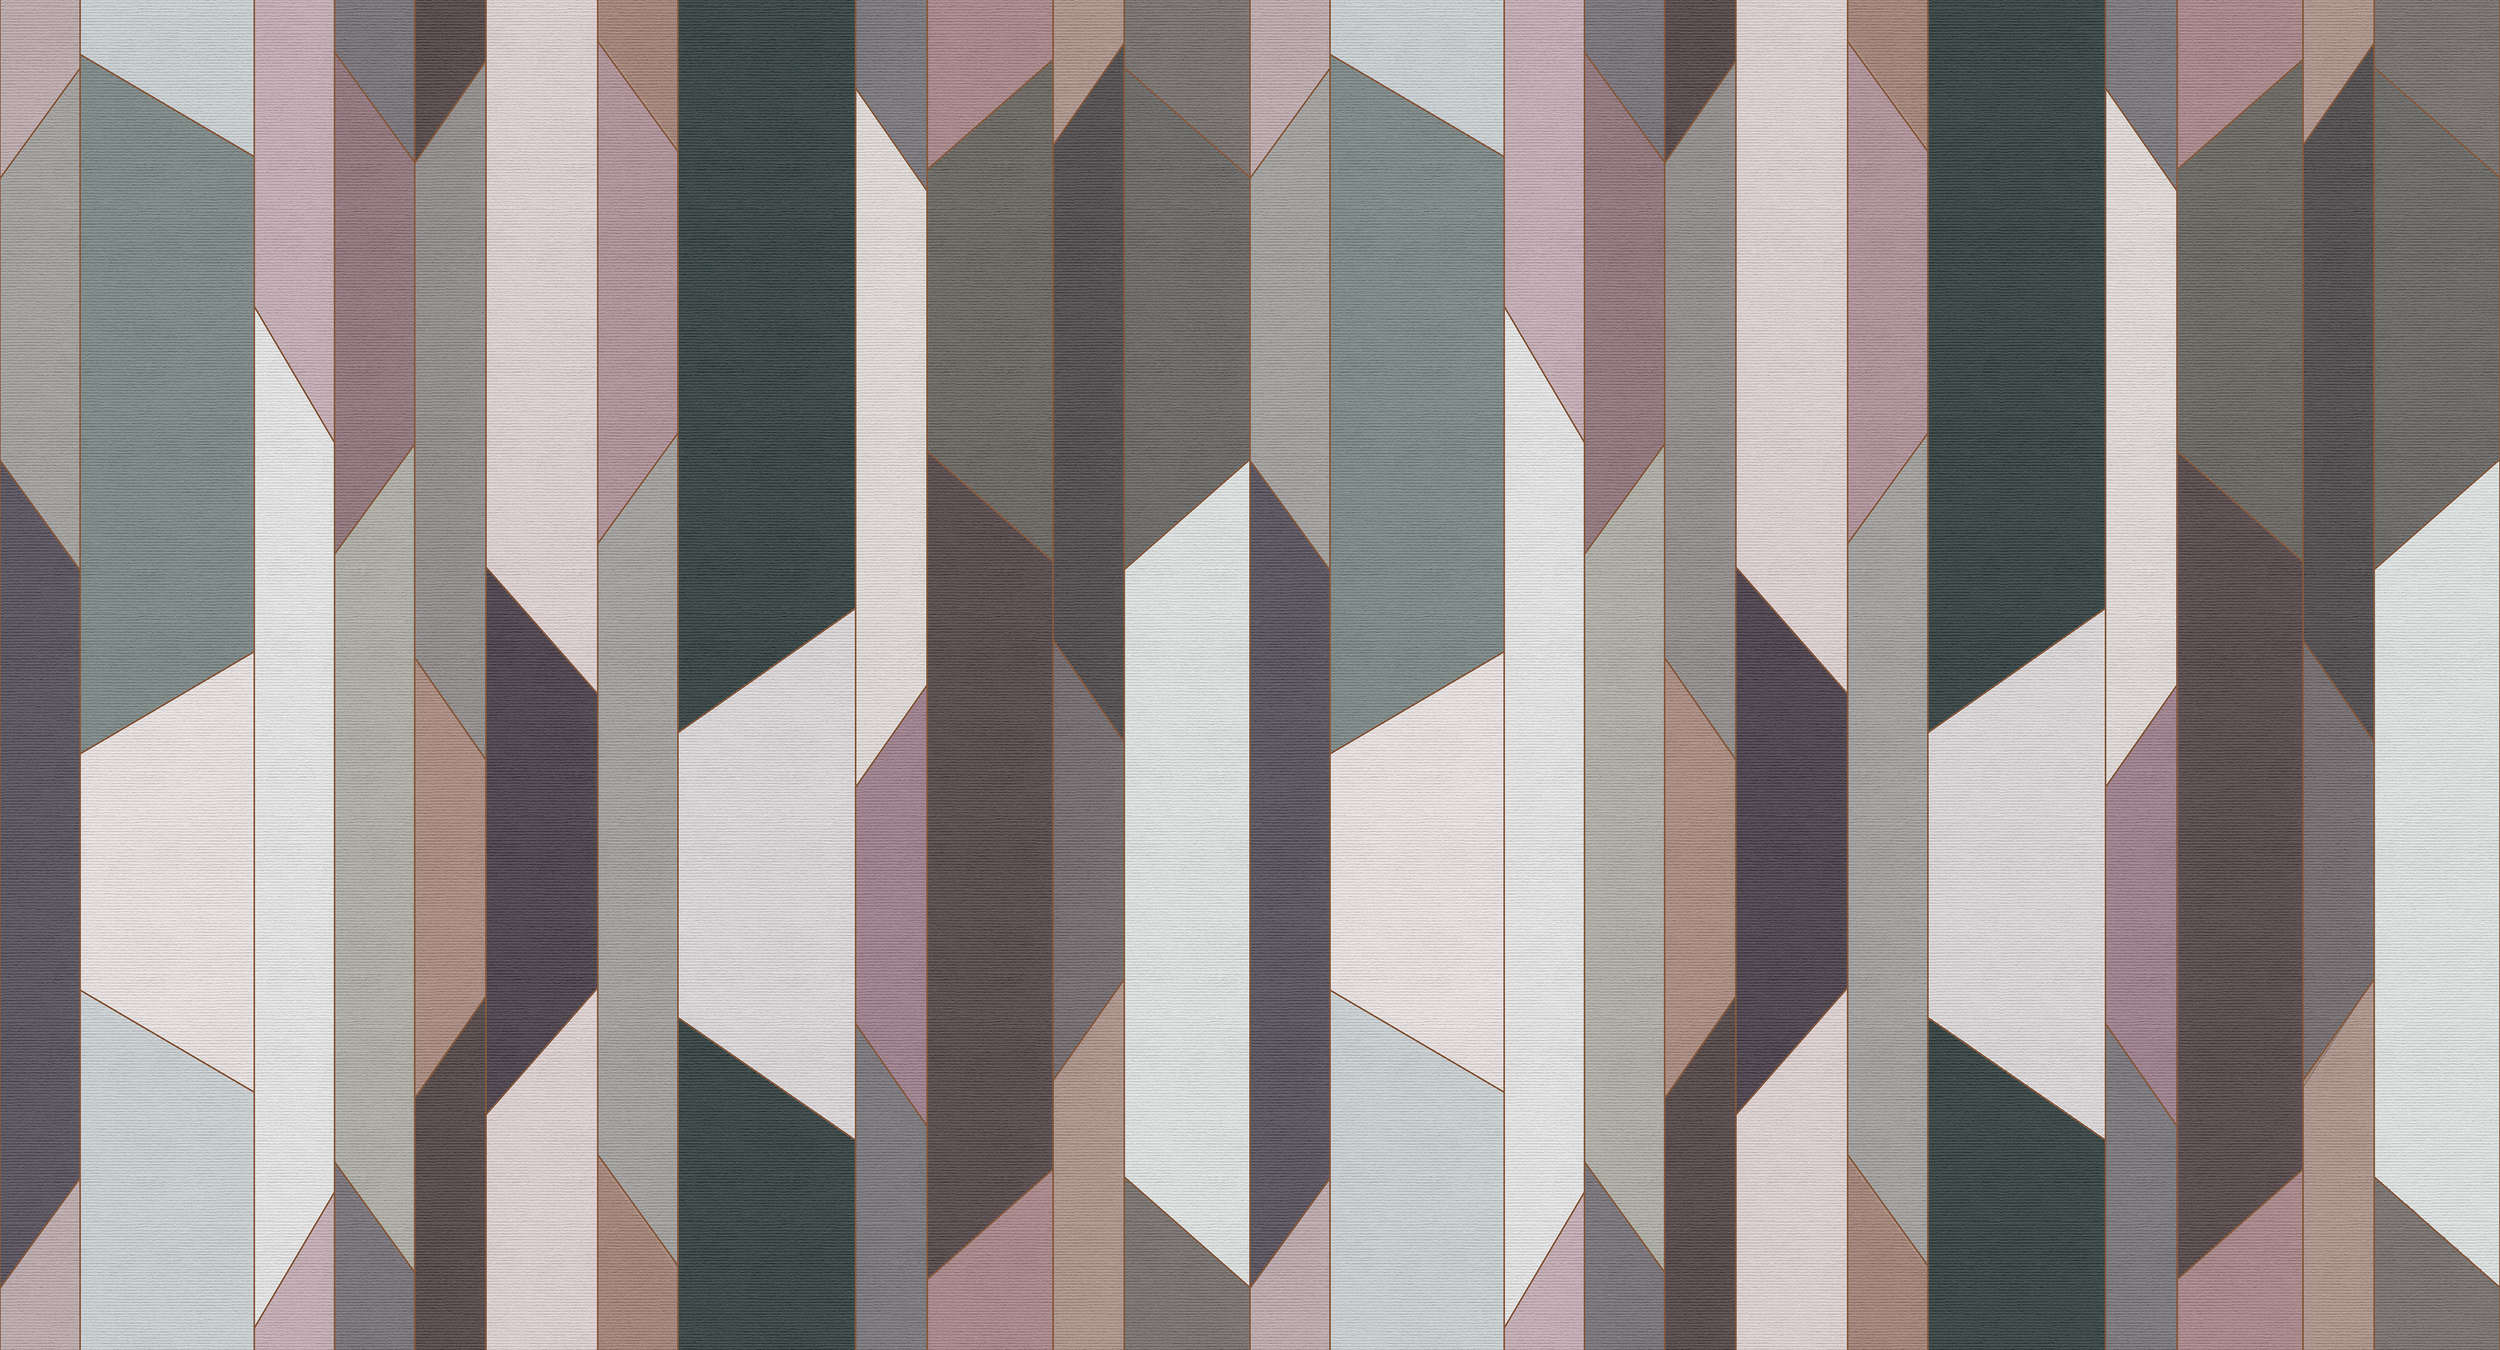             Fold 2 - Photo wallpaper in ribbed structure with geometric retro pattern - Beige, Cream | Matt smooth fleece
        